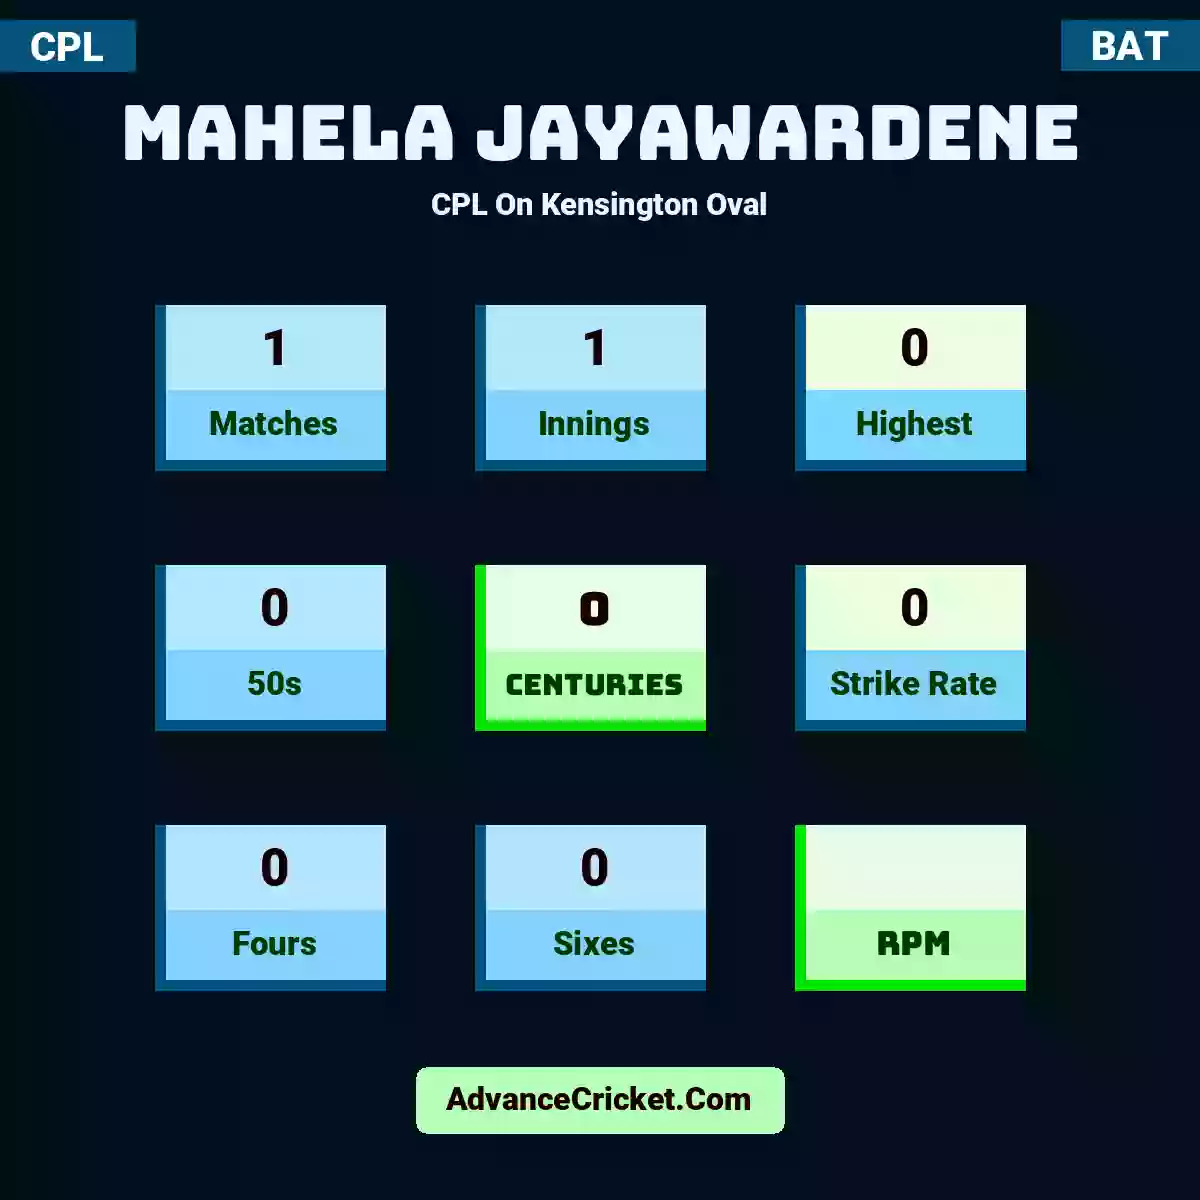 Mahela Jayawardene CPL  On Kensington Oval, Mahela Jayawardene played 1 matches, scored 0 runs as highest, 0 half-centuries, and 0 centuries, with a strike rate of 0. M.Jayawardene hit 0 fours and 0 sixes.